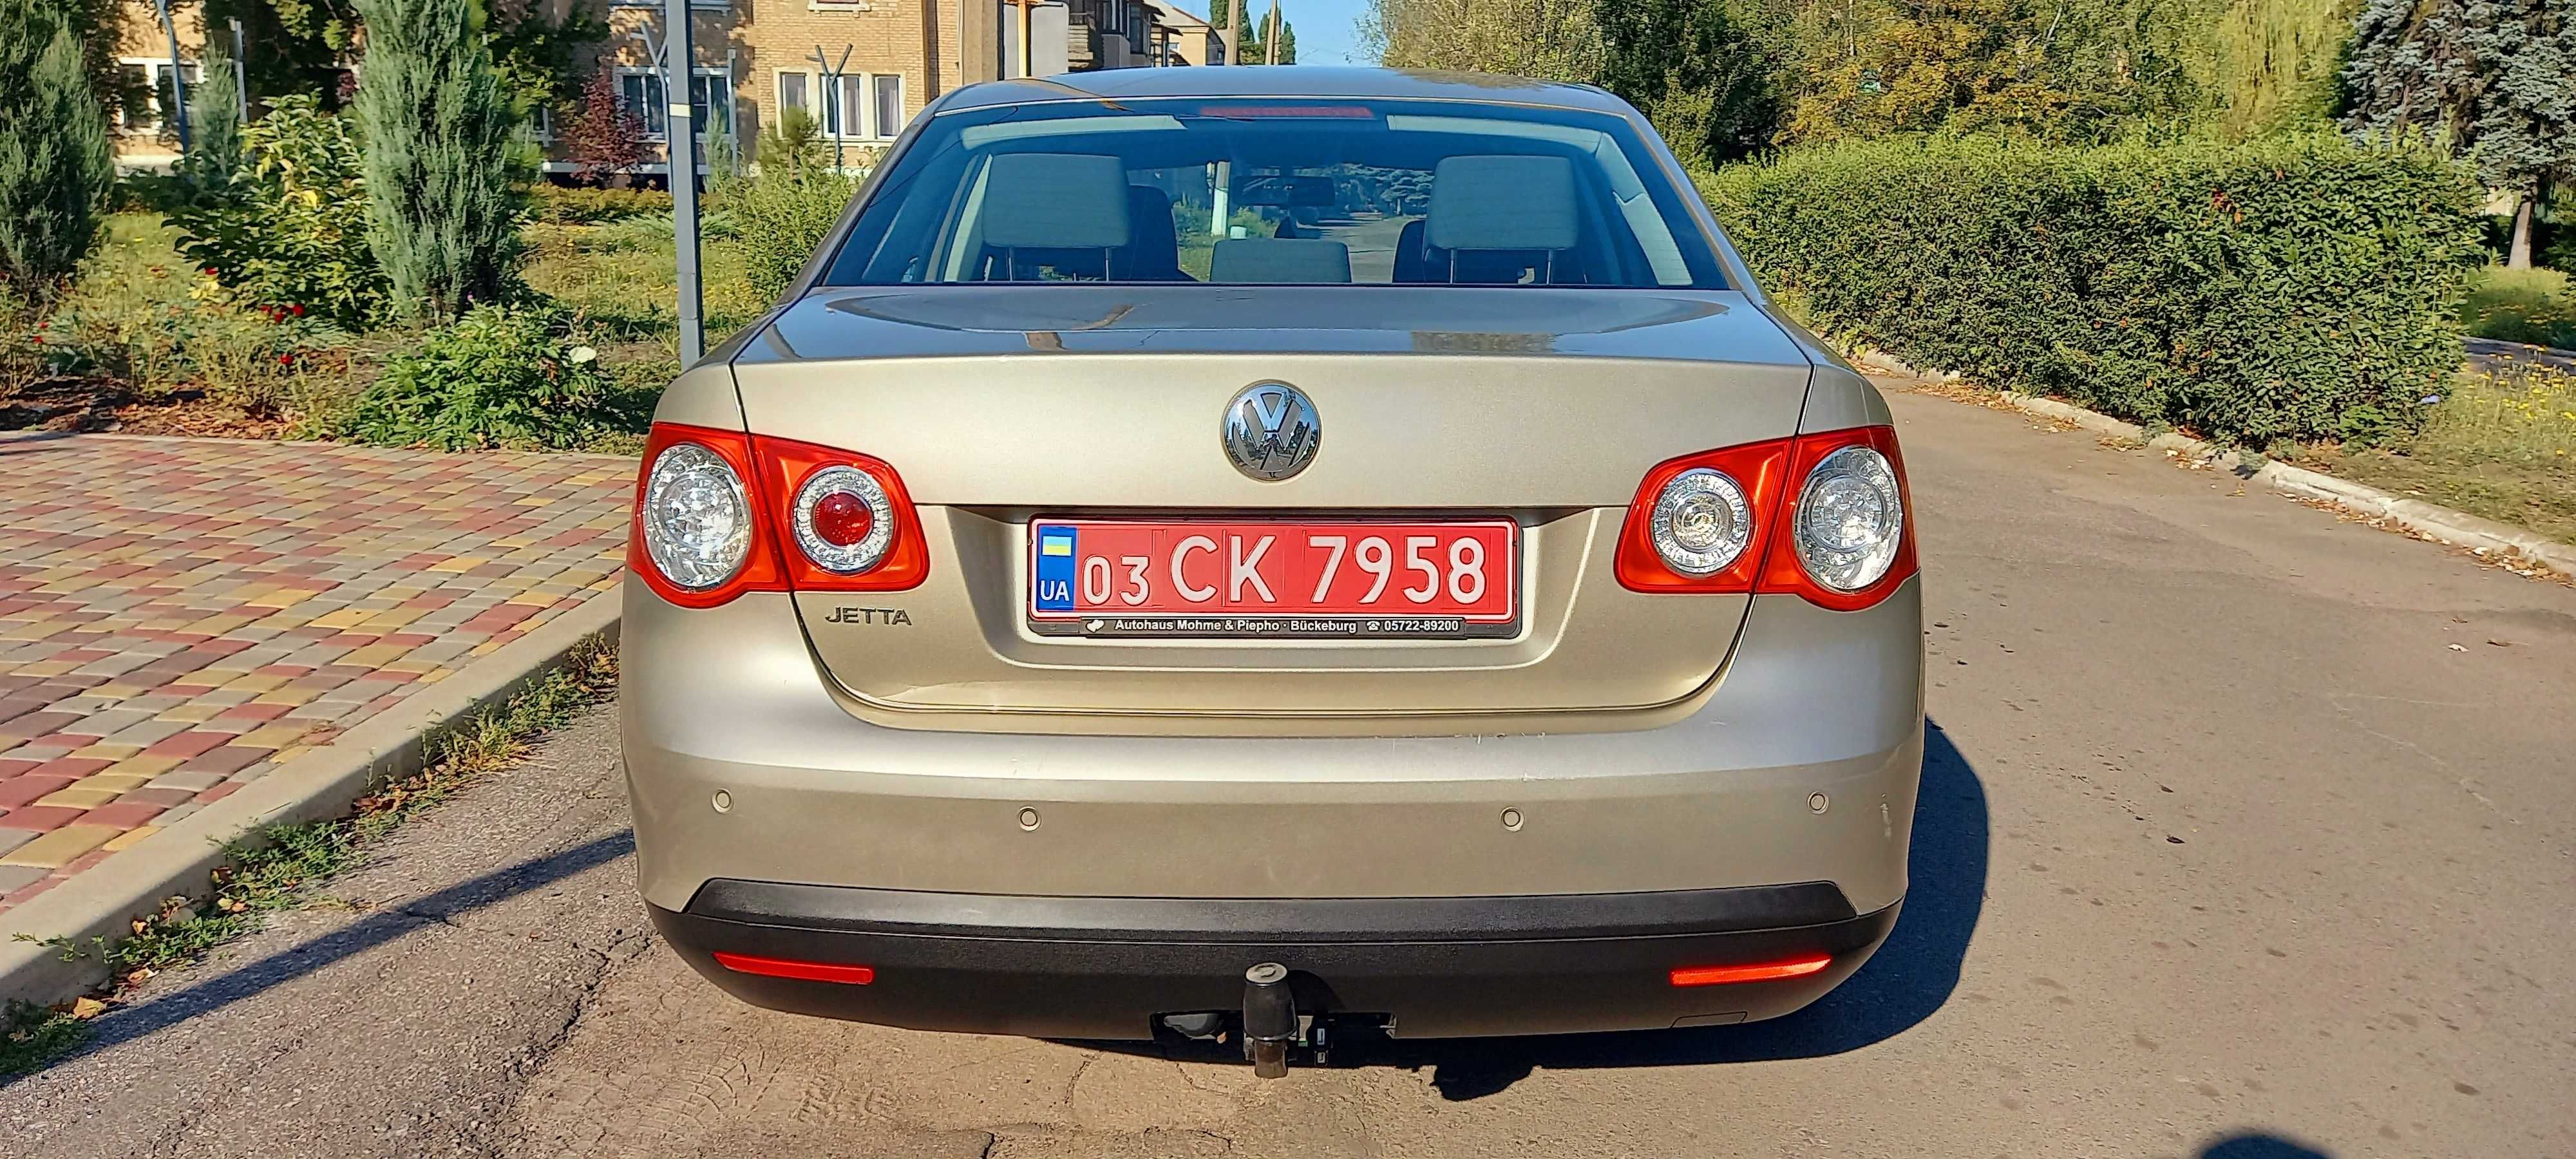 Volkswagen Jetta 1.6 MPI